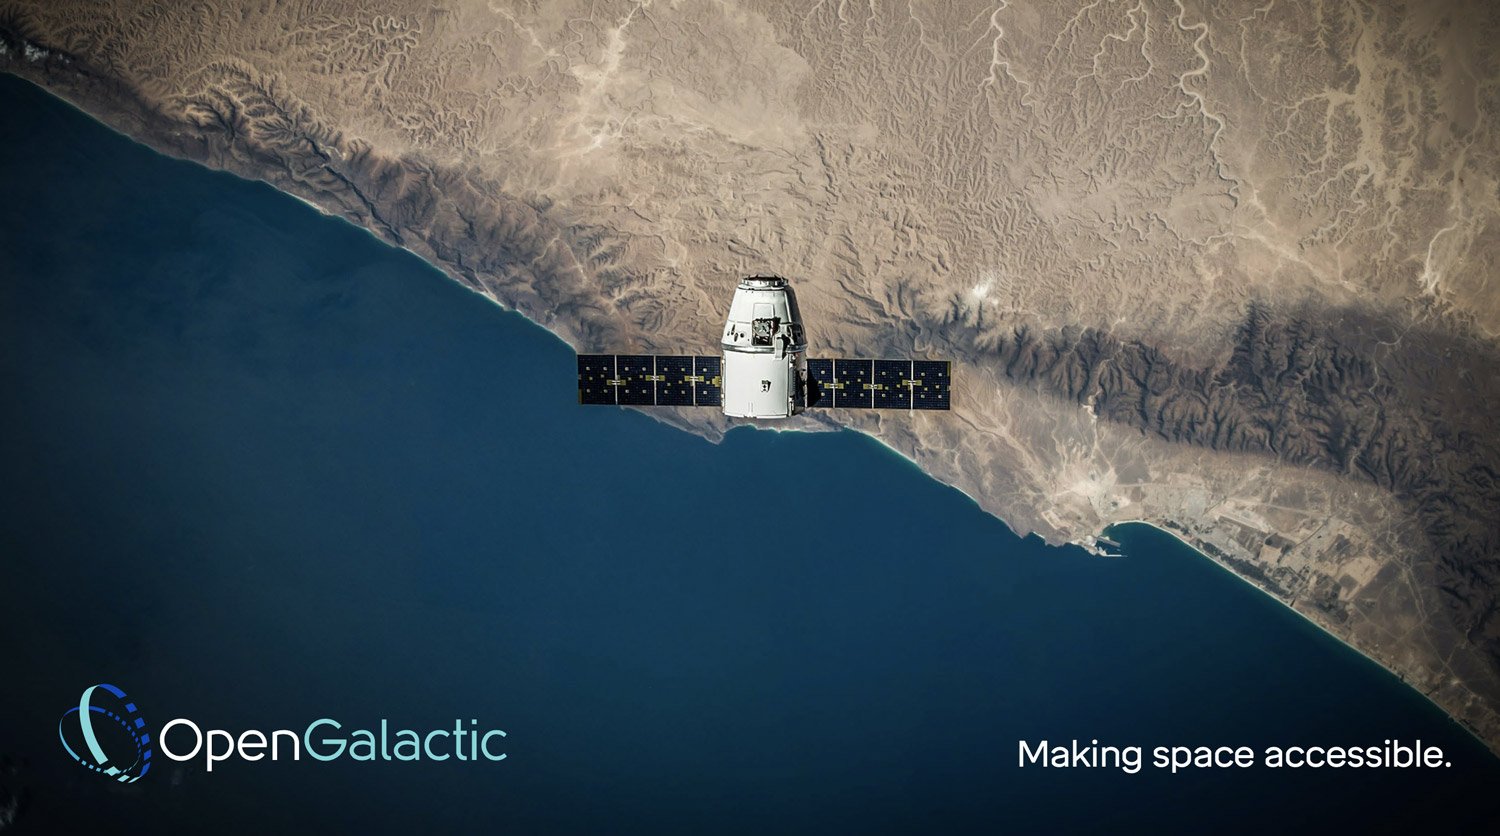 Satelite in orbit photography for Open Galactics award winning design